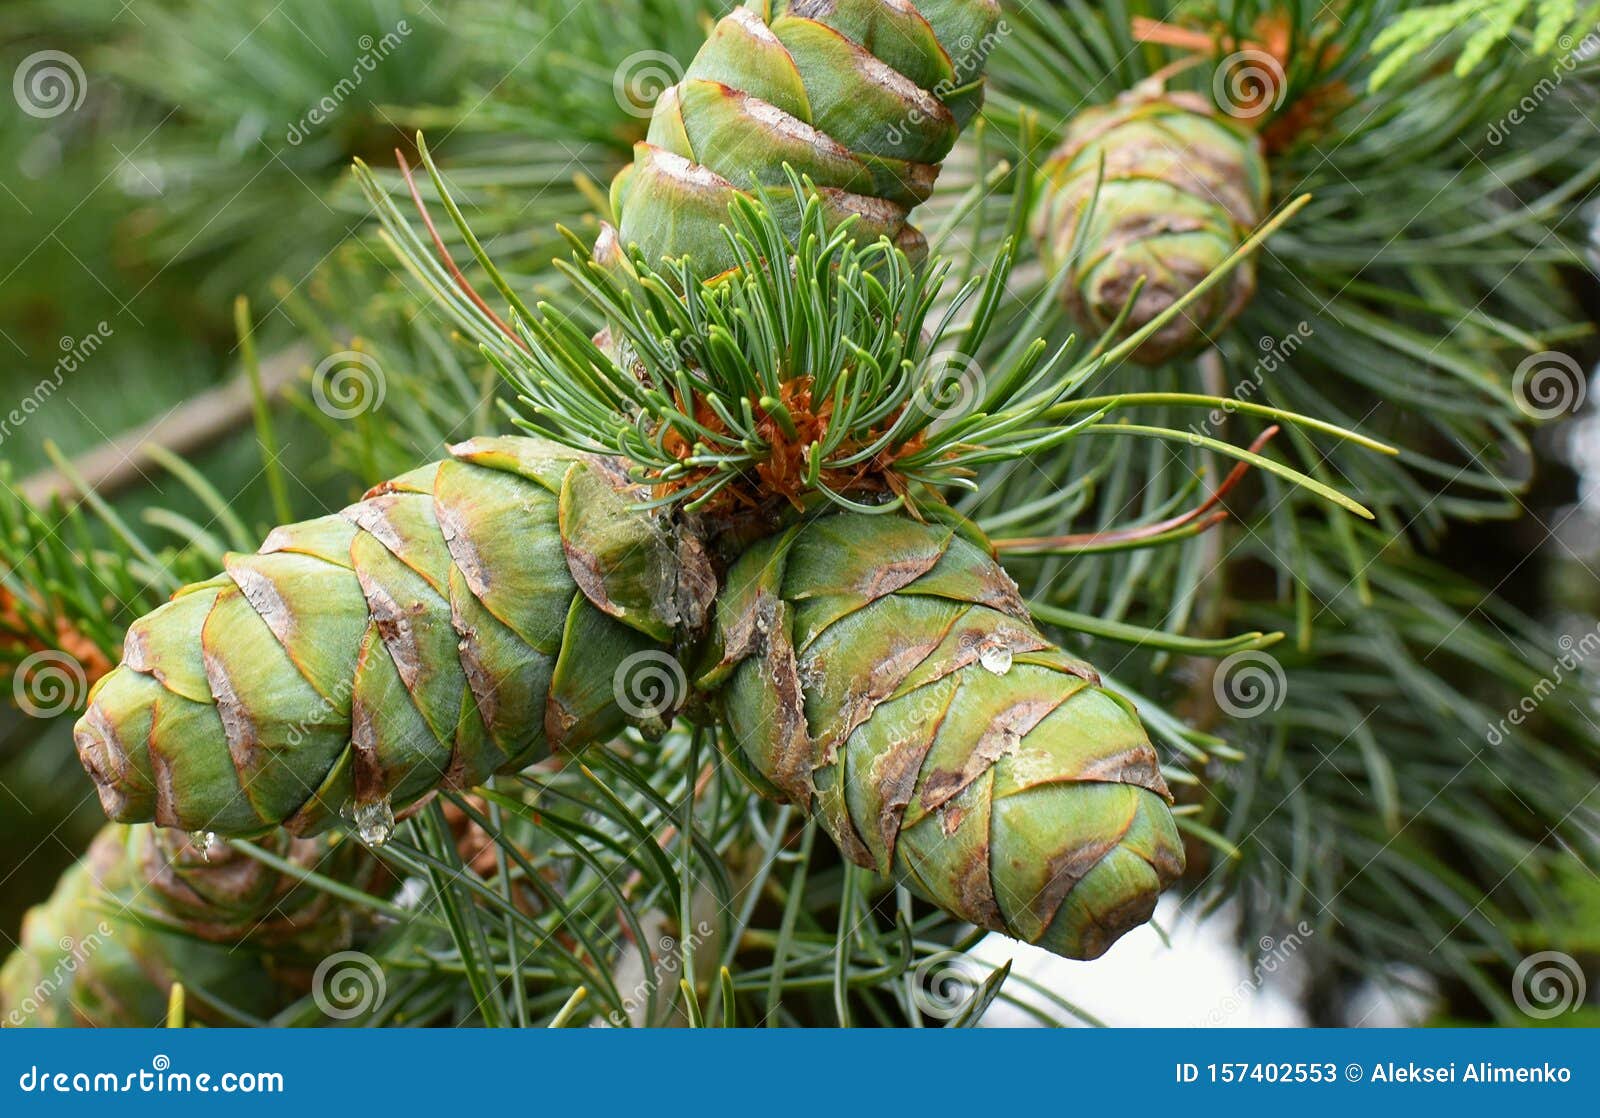 cedrus deodara tree mainly known as cedar with seed cones.